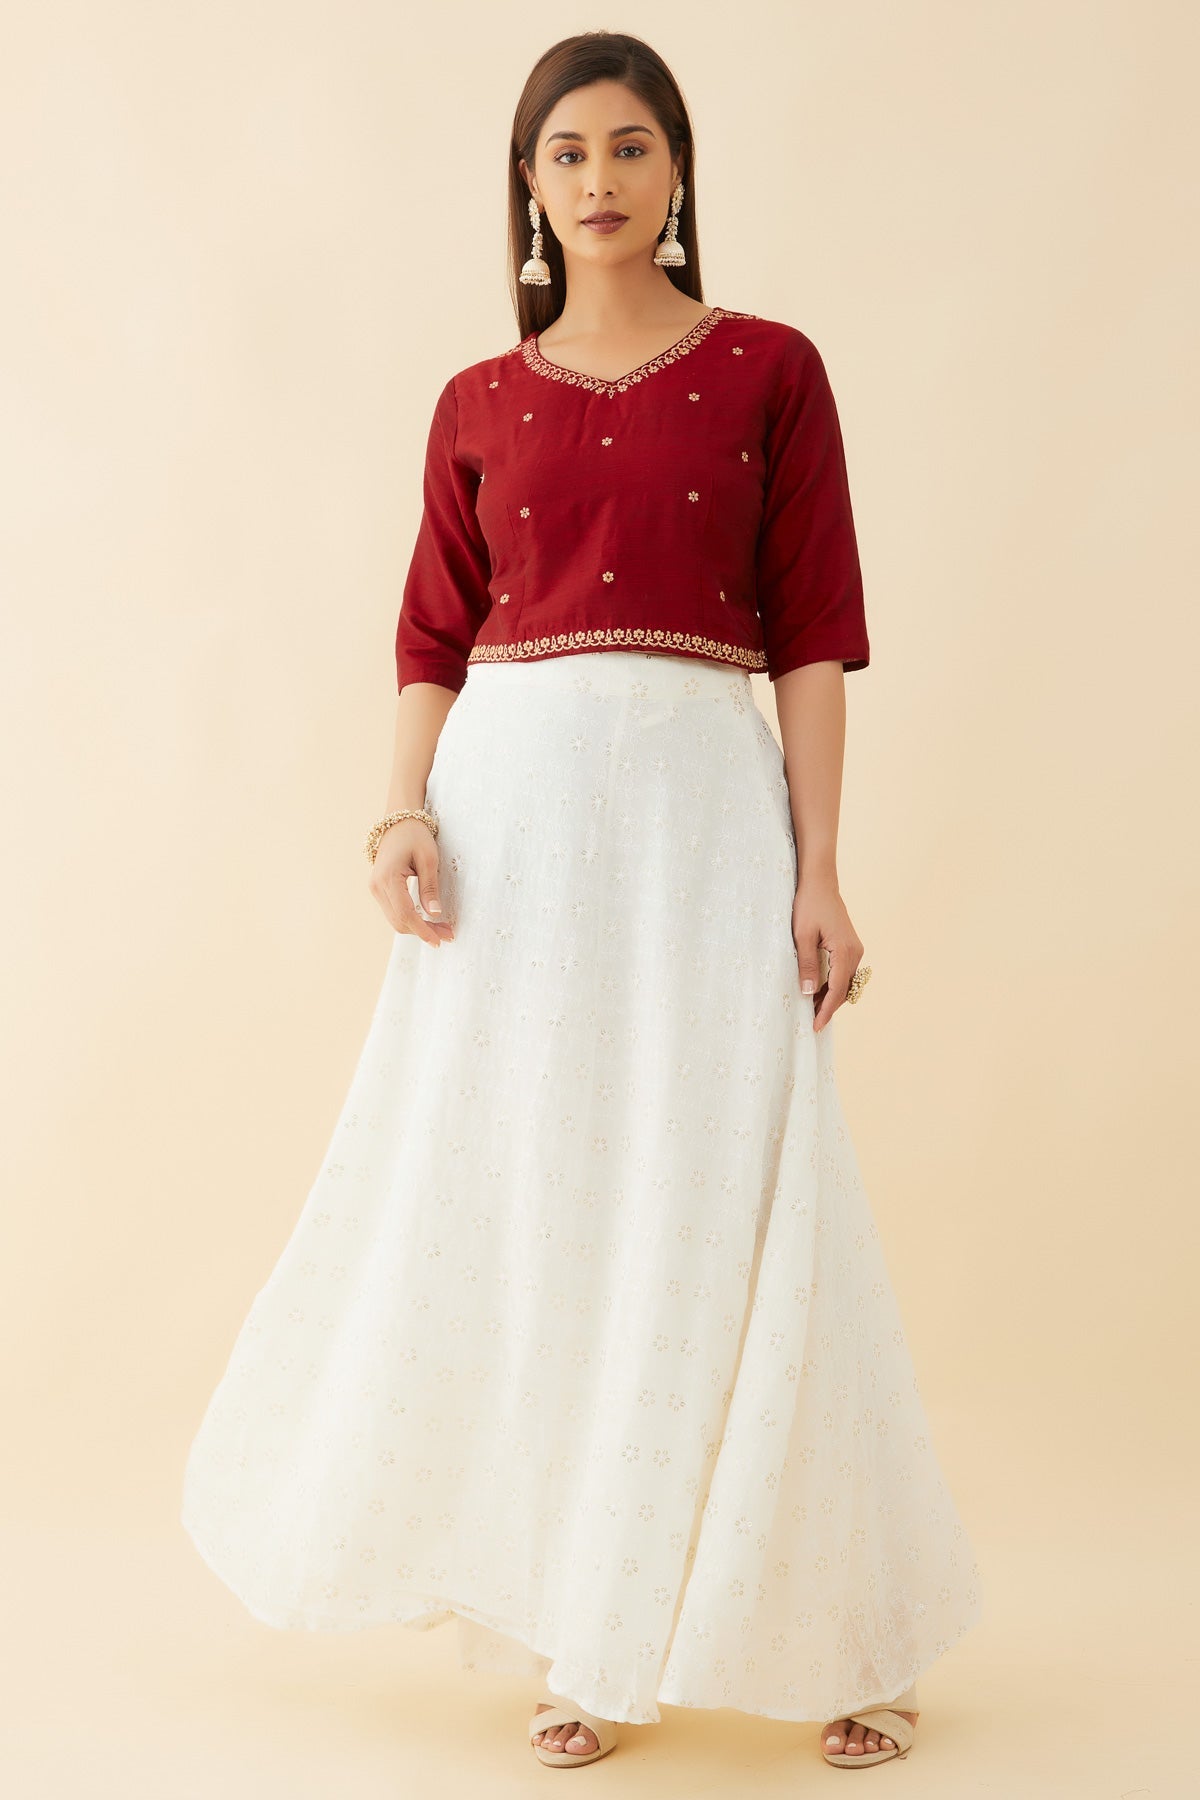 Floral Motif Embroidered Crop Top & Sequin Embellished Skirt Set - Red & White